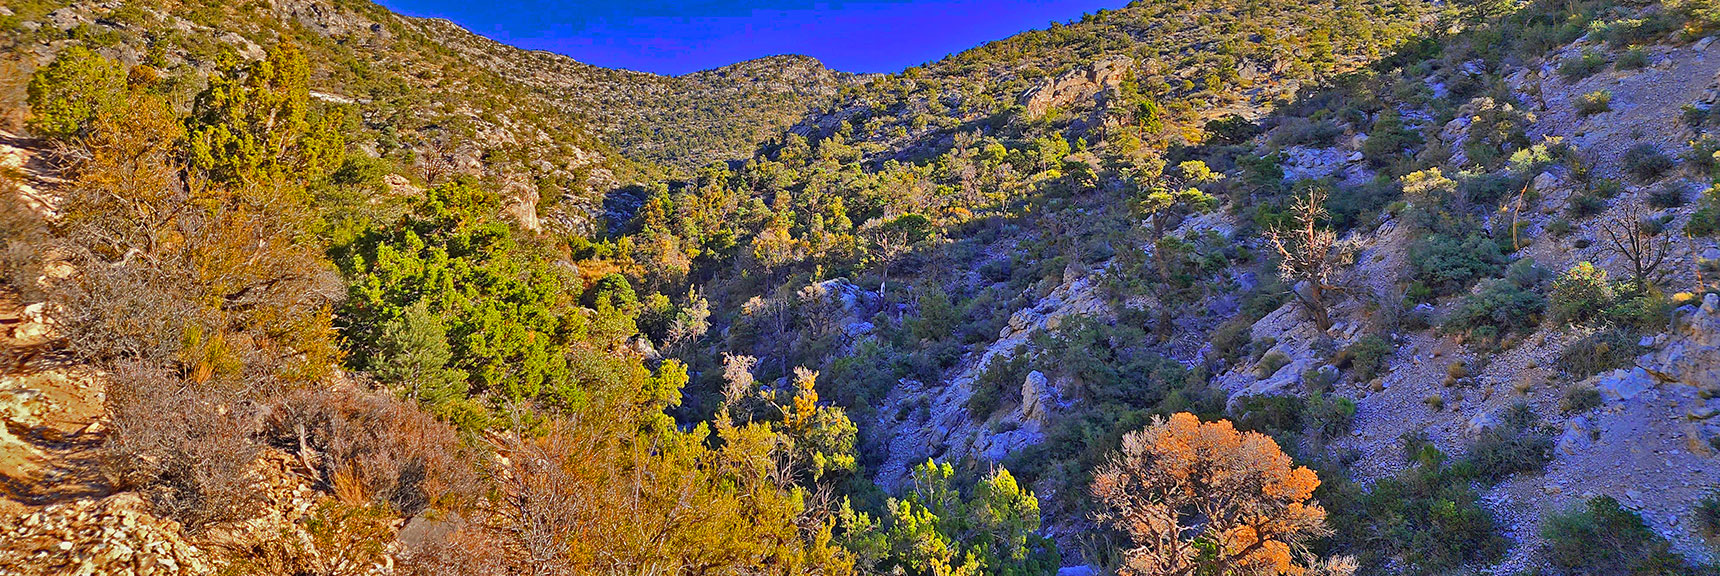 Lush Vegetation in La Madre Spring Canyon, Desert Above | Keystone Thrust West Summit Above White Rock Mountain | La Madre Mountains Wilderness, Nevada